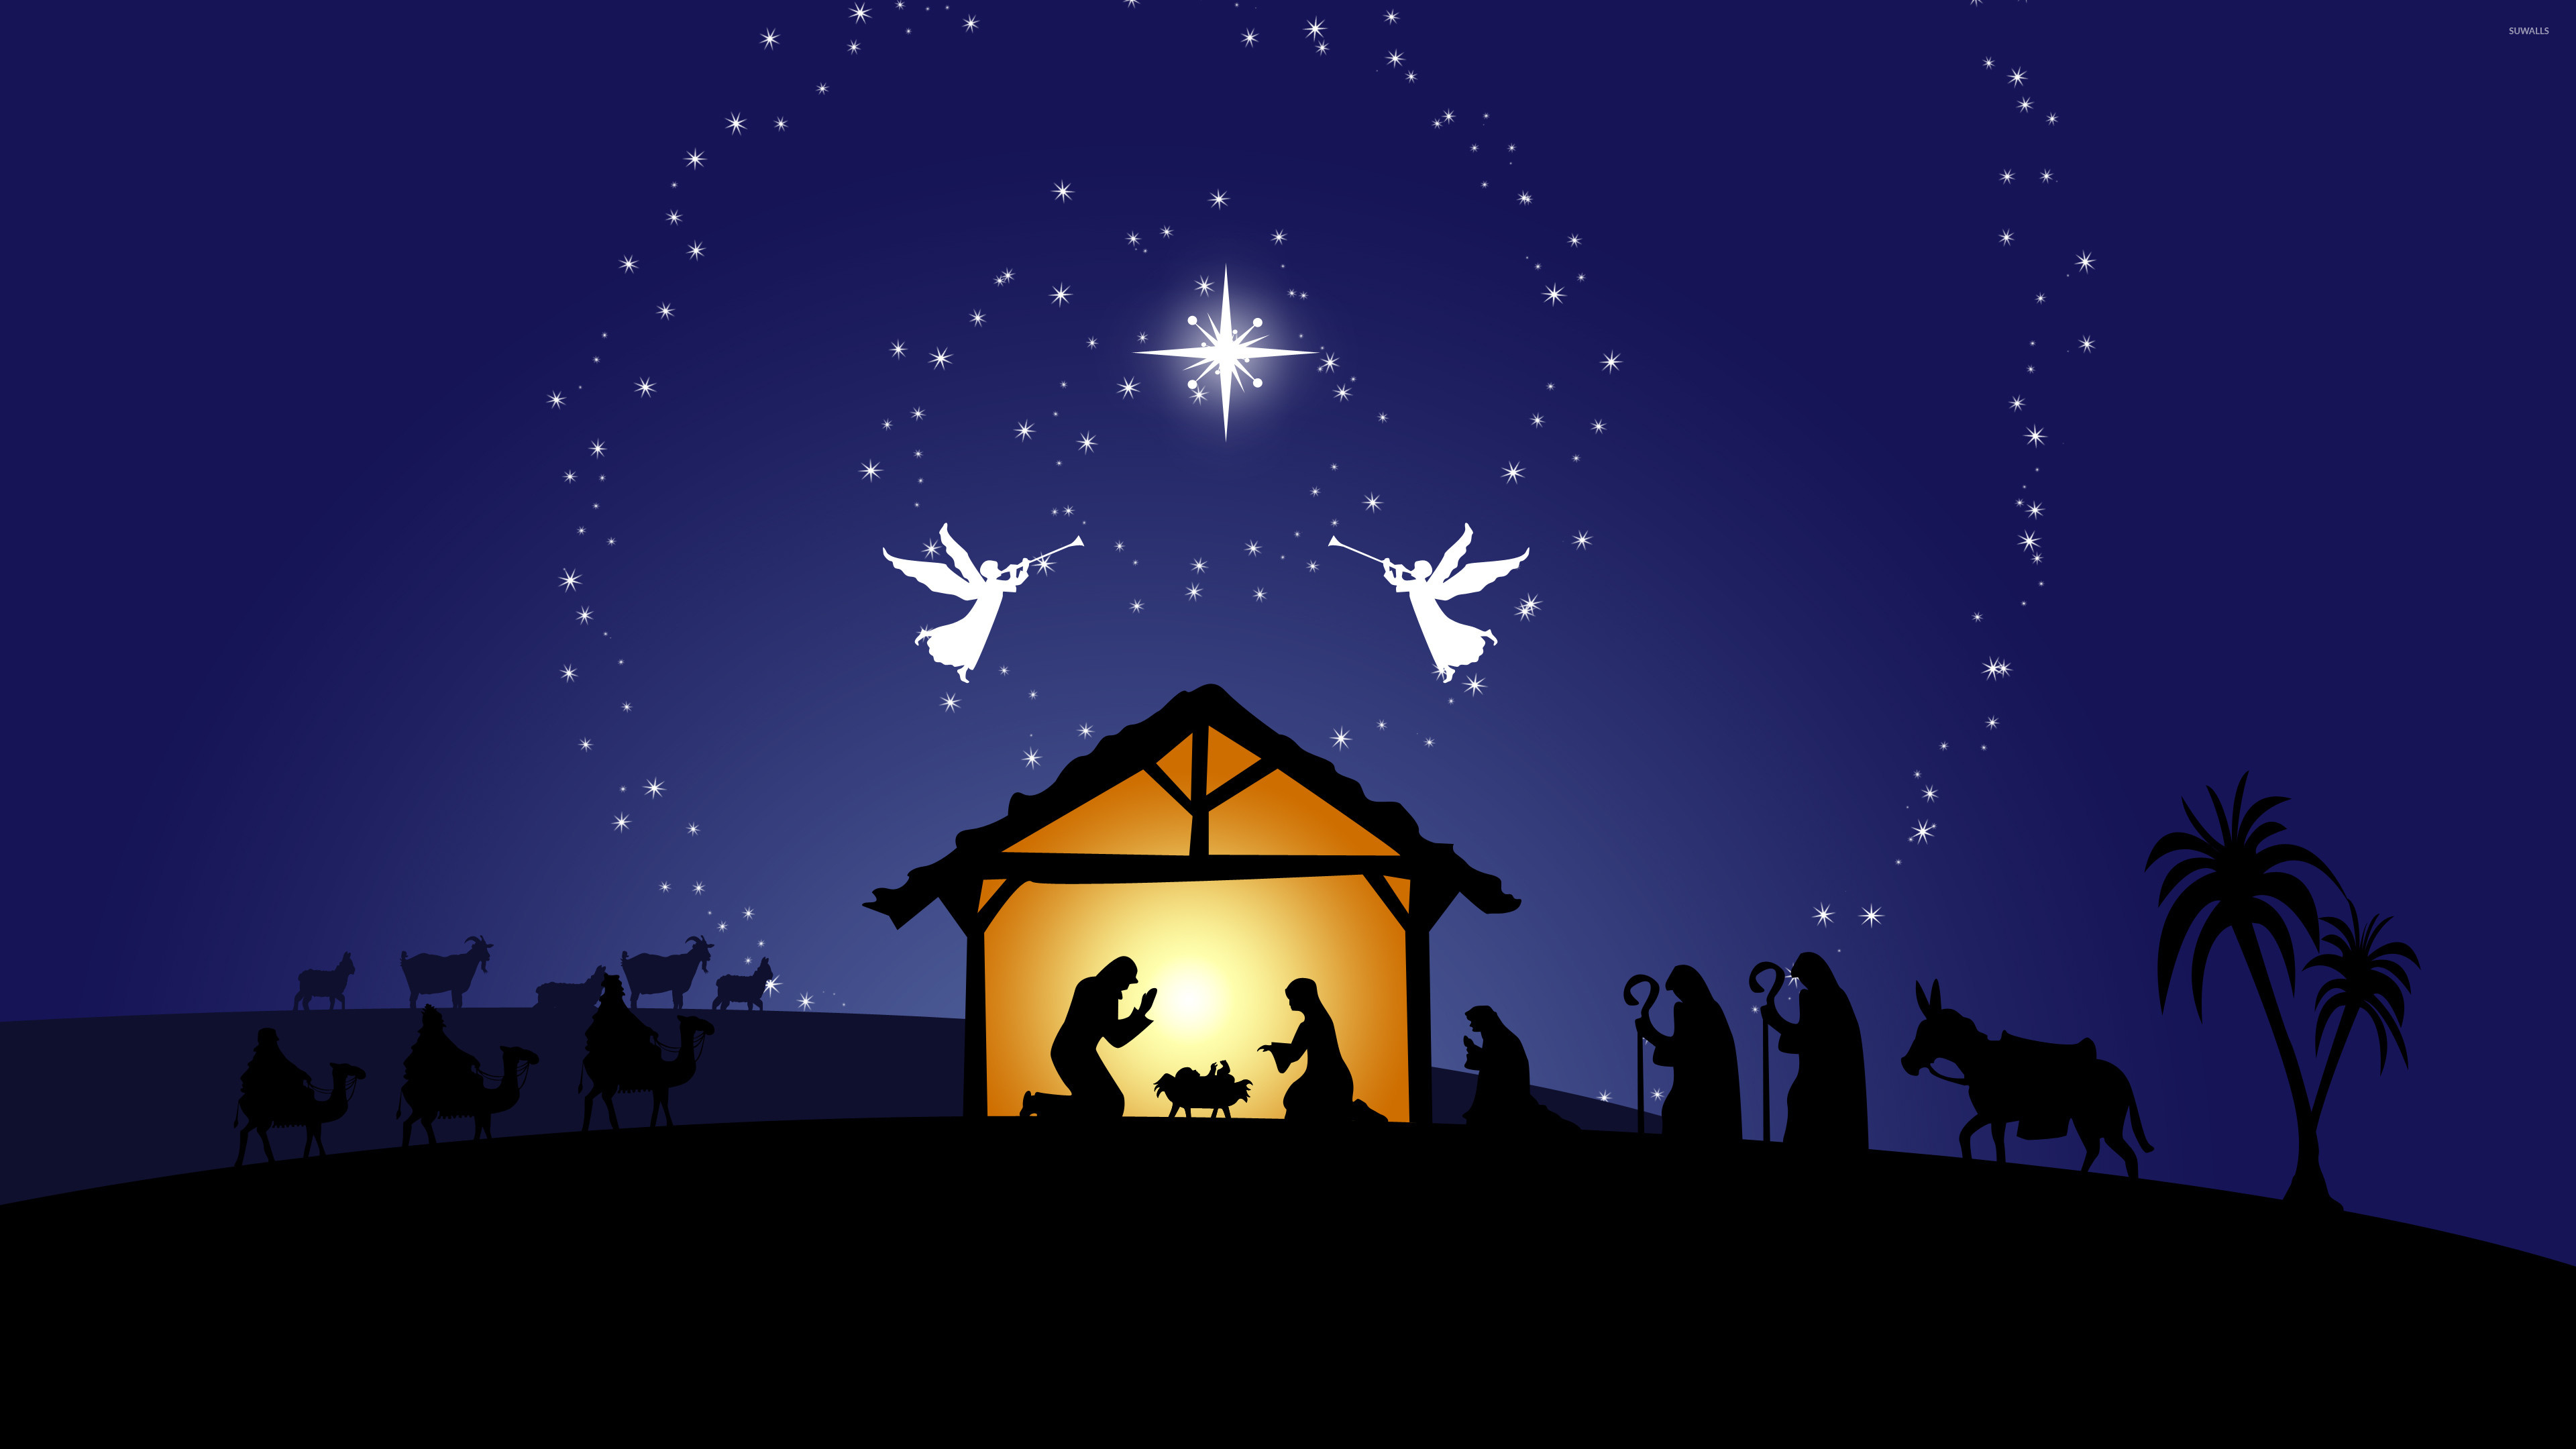 3840x2160 Christmas Nativity Scene Wallpaper - WallpaperSafari